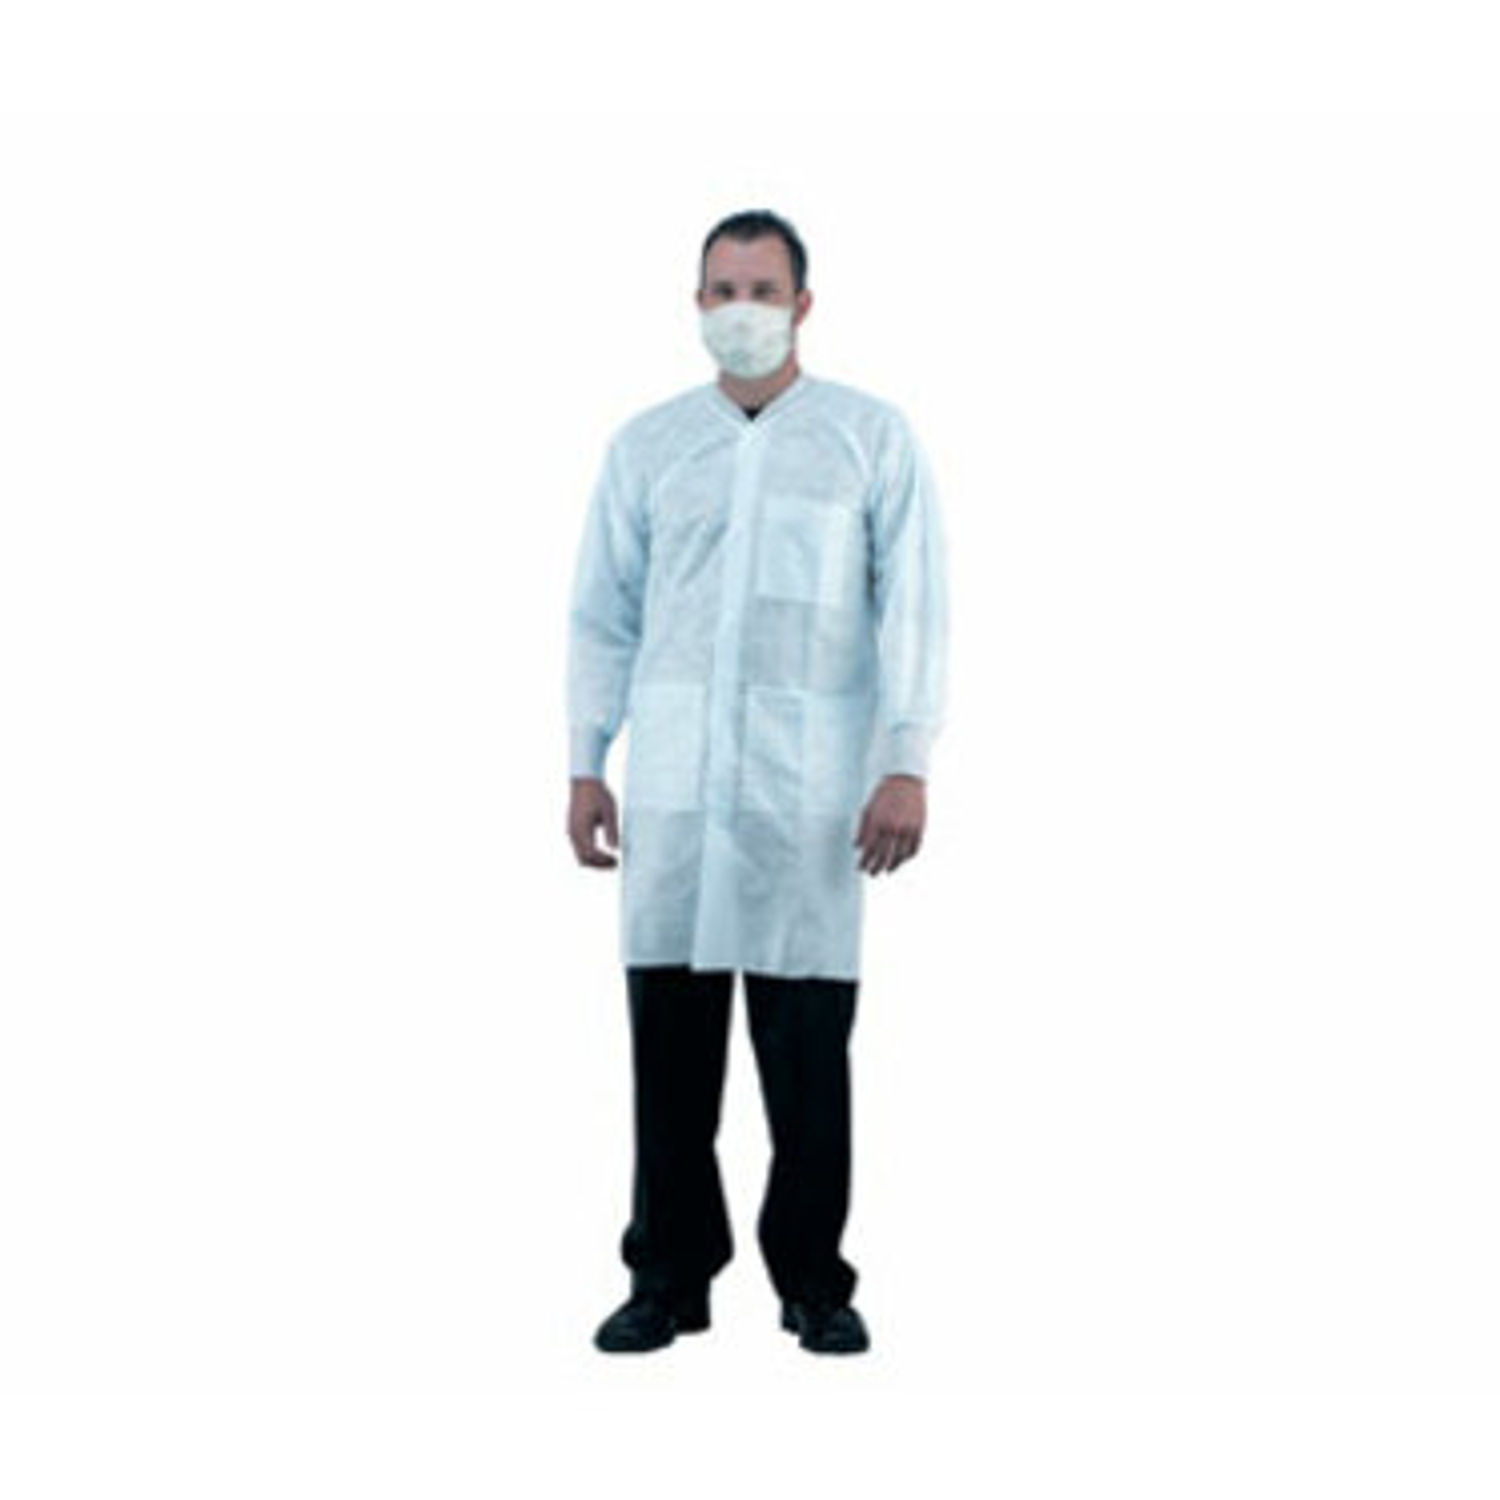 Heavy Duty Disposable Lab Coat Without Pockets Medium (M) Size For Unisex, 42" Length, White, Polypropylene